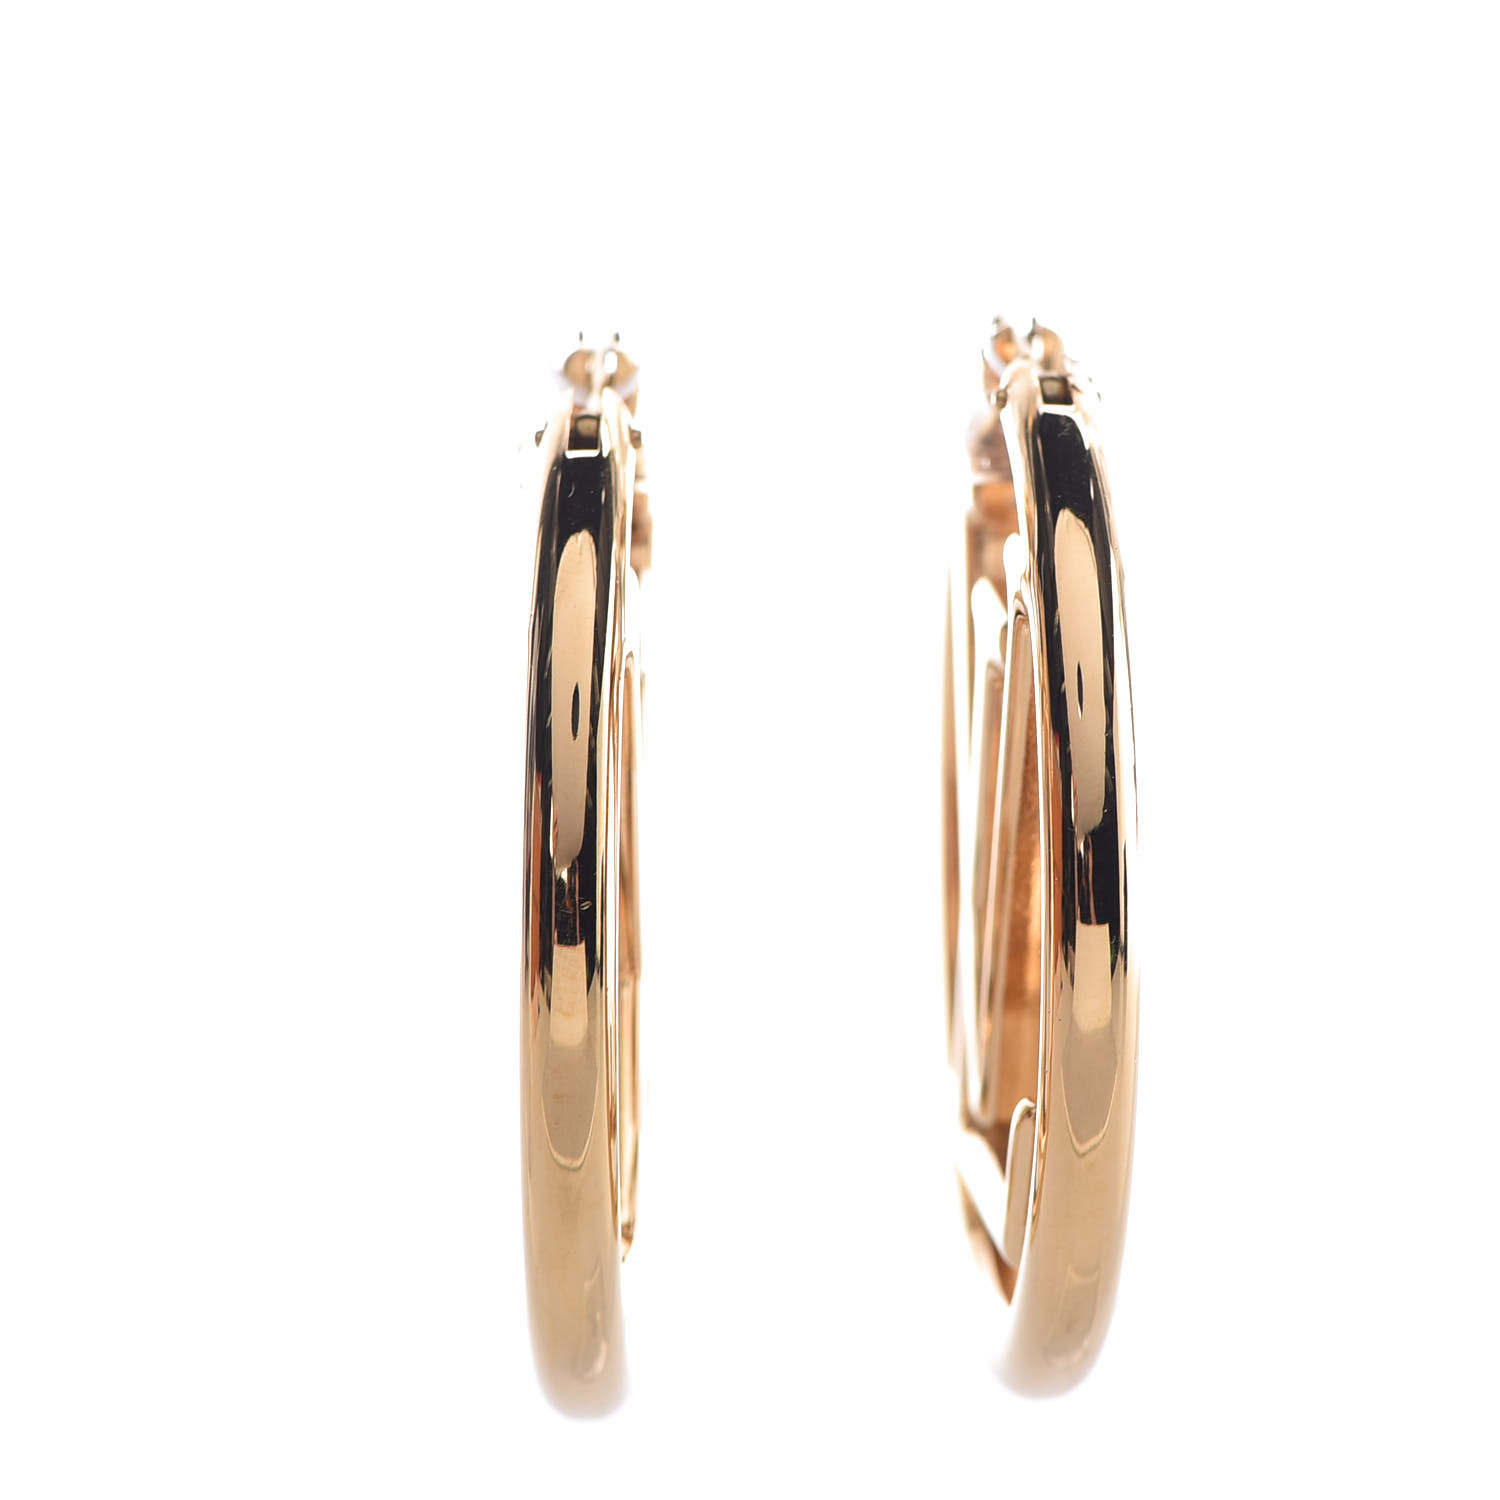 Shop Louis Vuitton Louise hoop earrings (M80136, M64288) by トモポエム